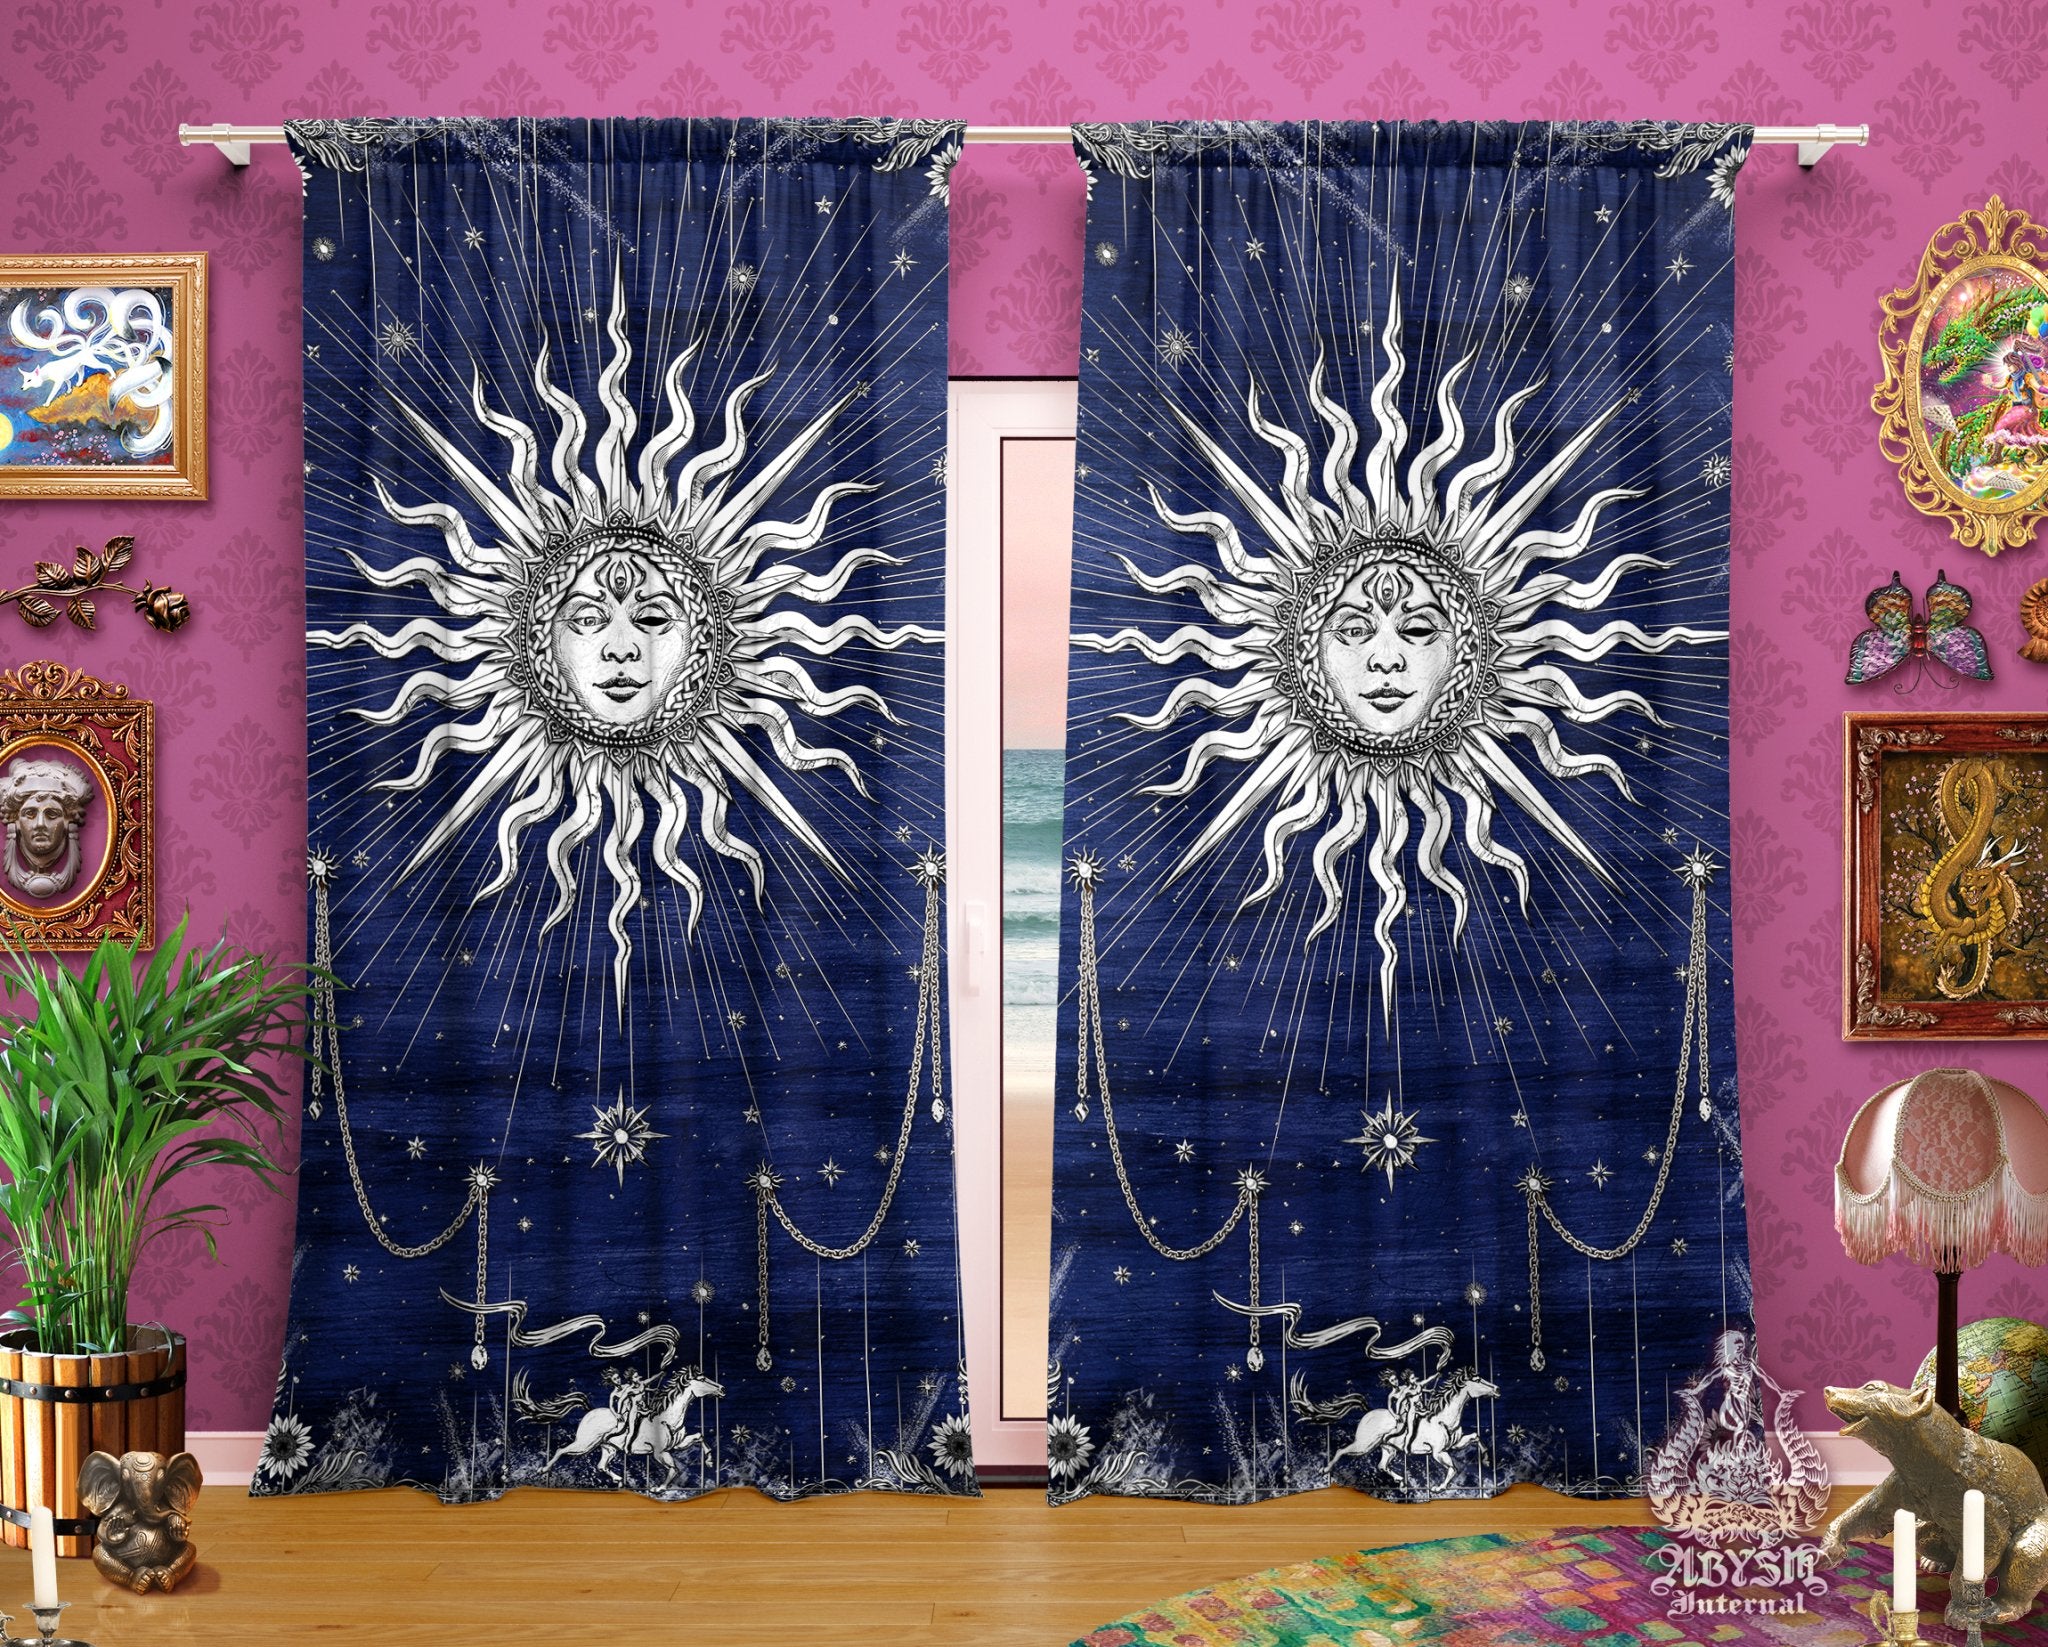 Indie Sun Curtains, 50x84' Printed Window Panels, Boho Home Decor, Tarot Arcana, Esoteric Art Print - Paper White, 6 Colors - Abysm Internal